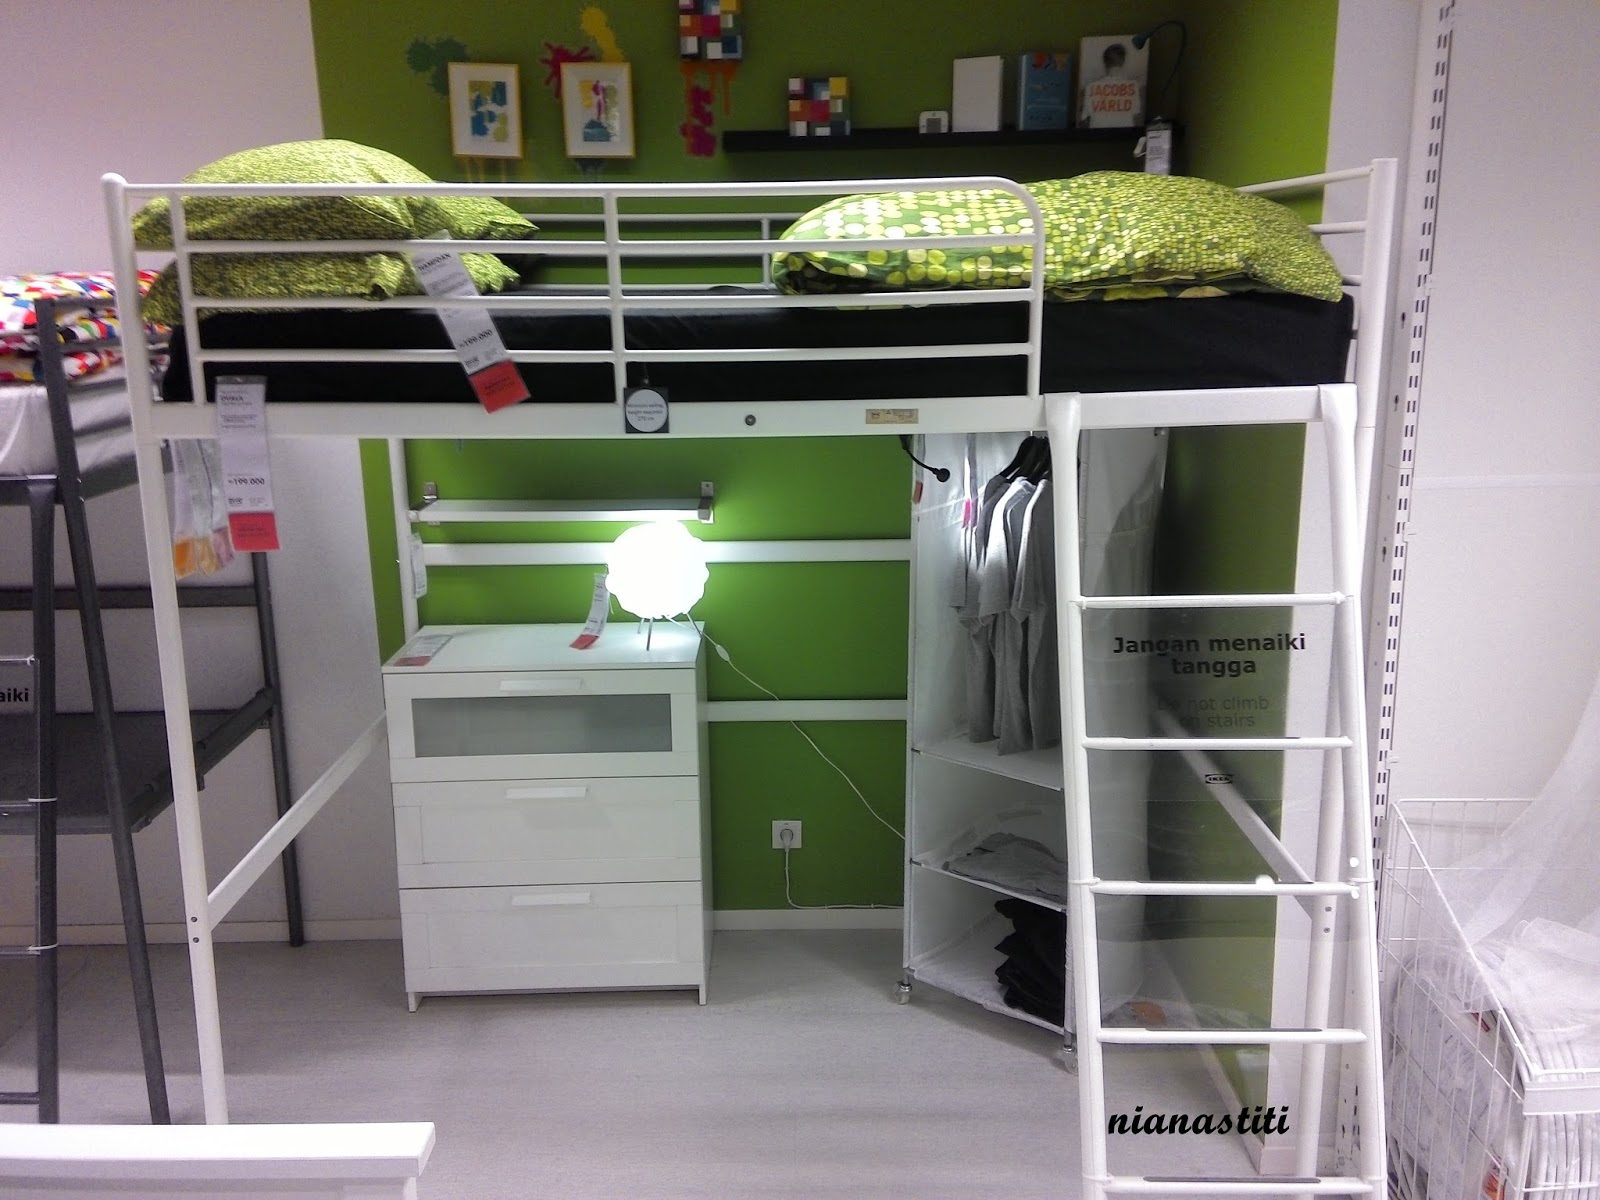  Desain  Kamar  Tidur  Minimalis Ikea  Arsihome